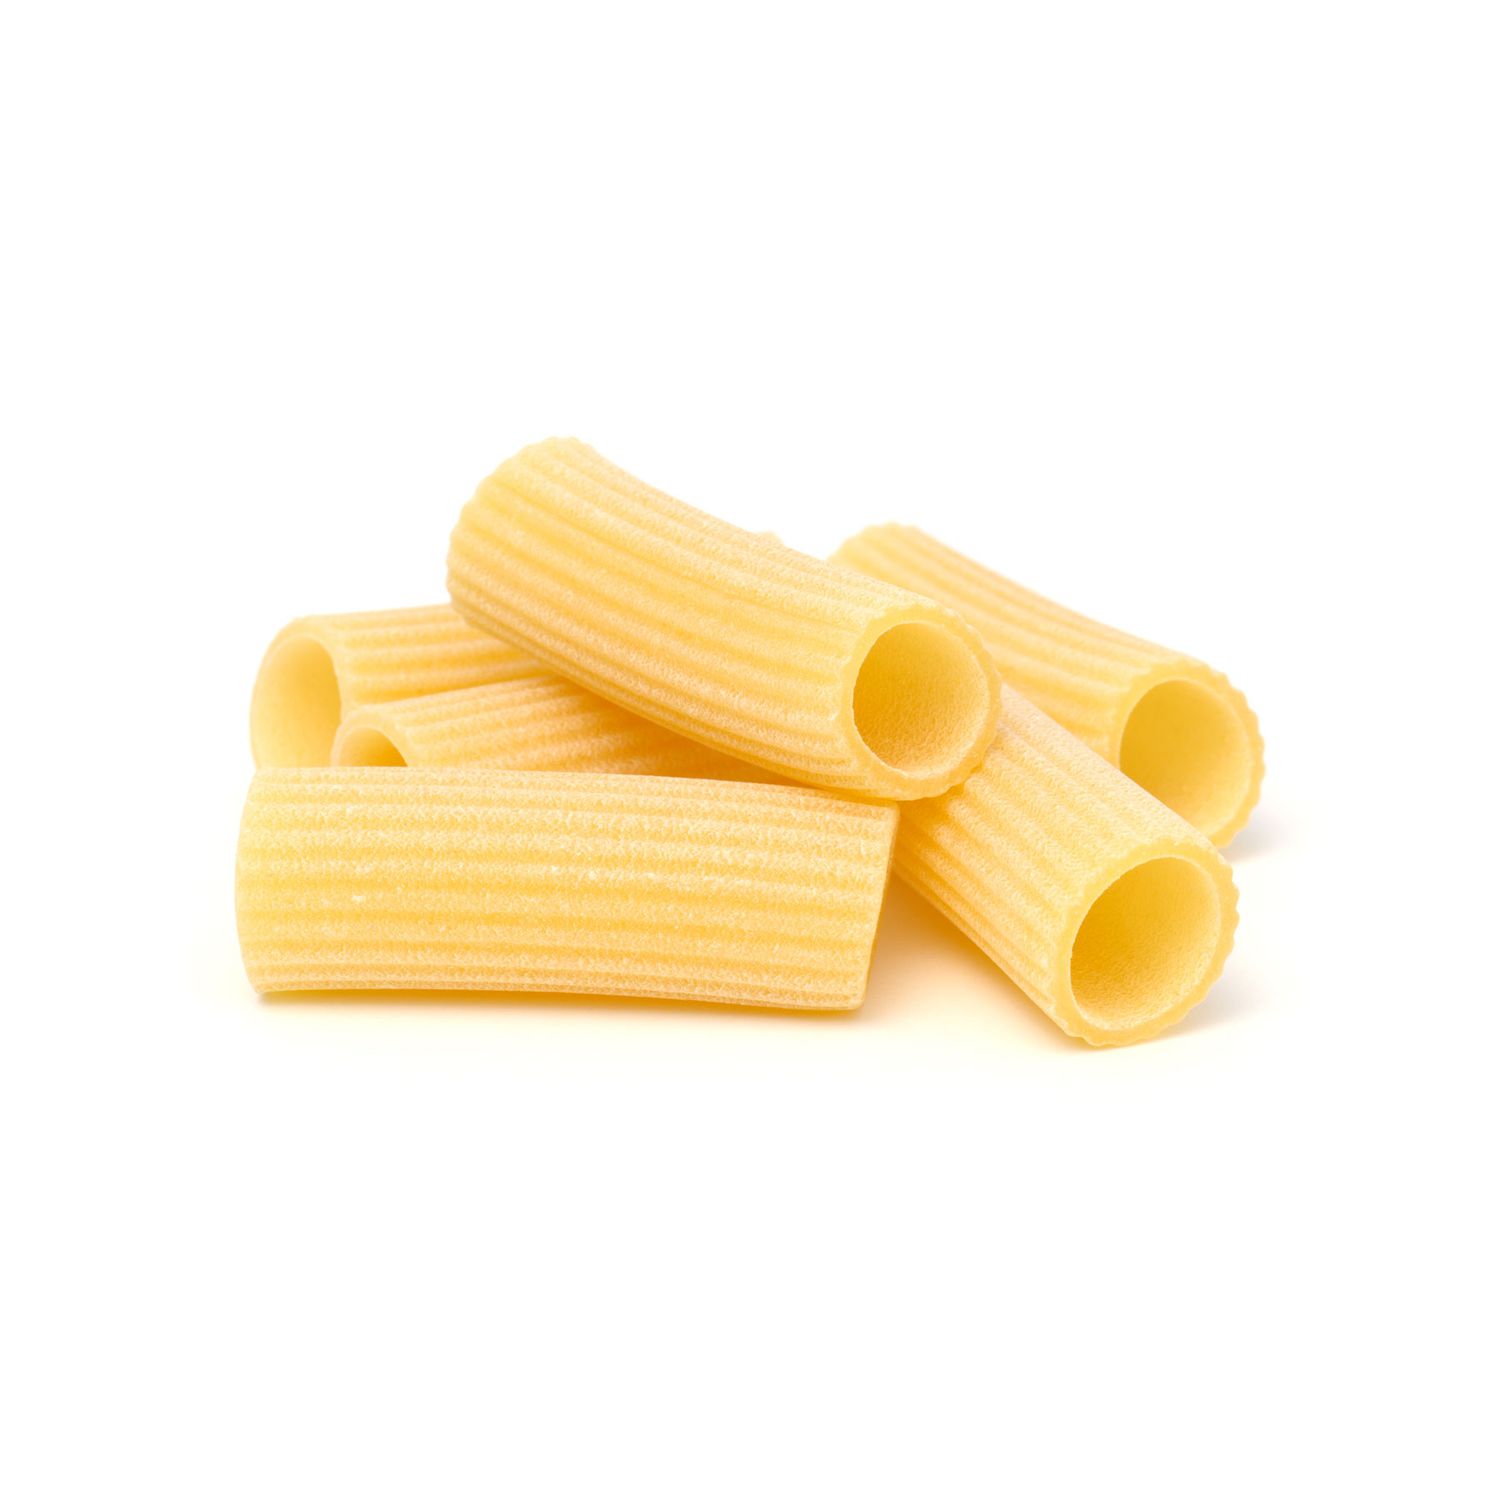 Types of pasta noodles - rigatoni